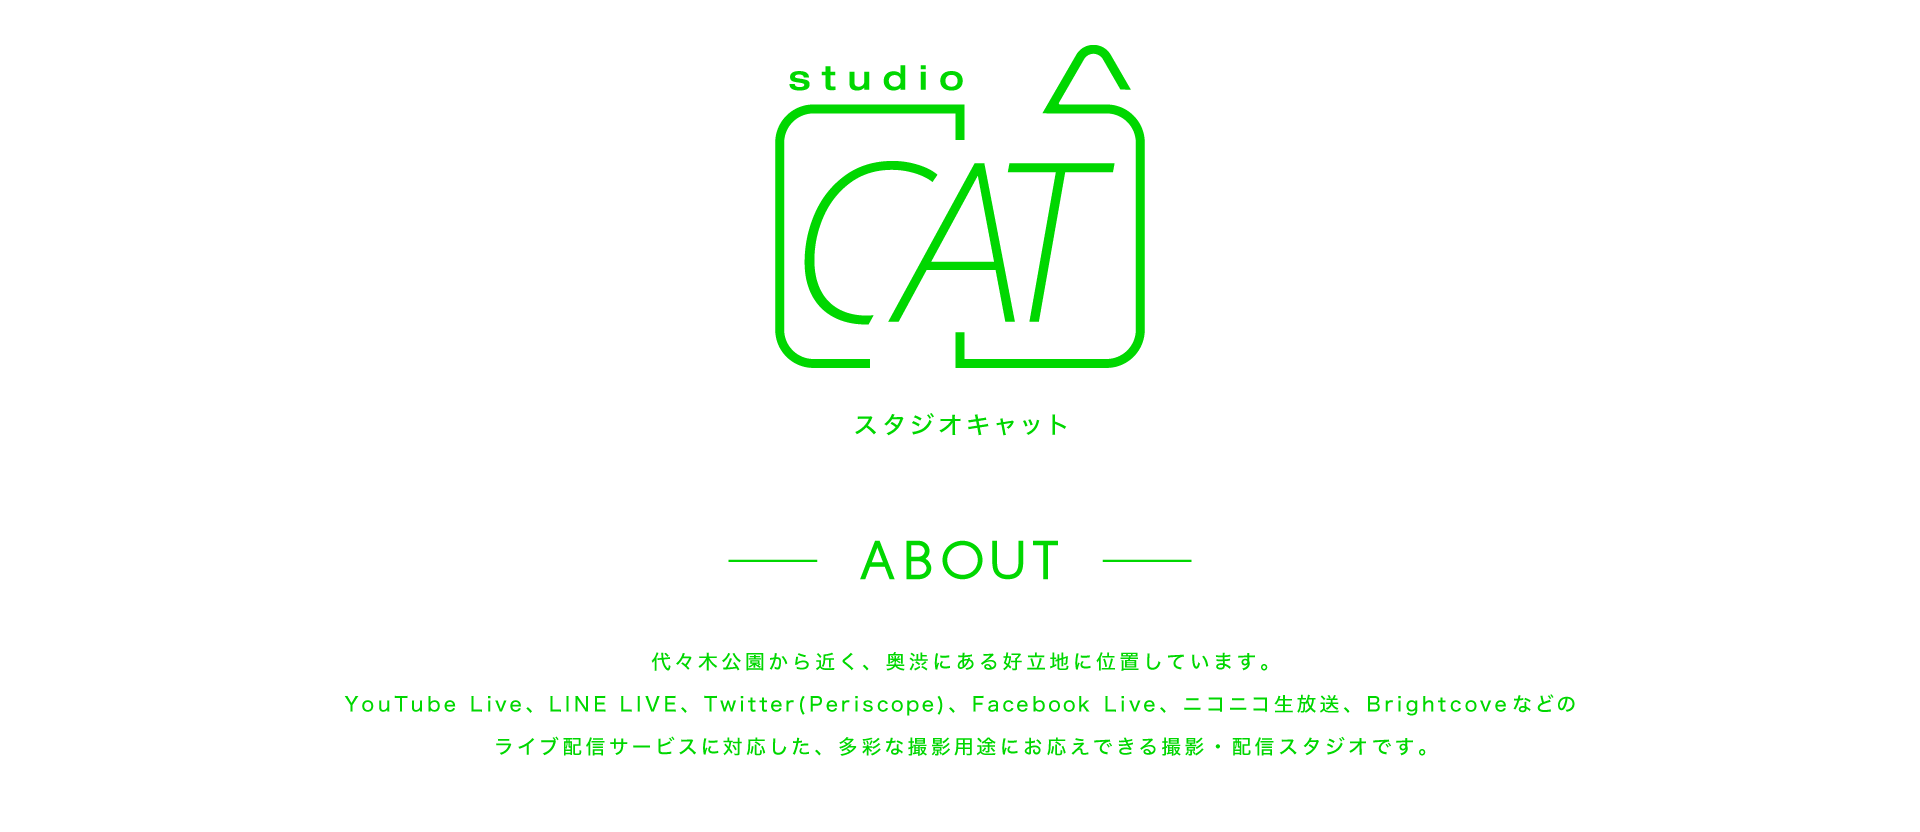 studiocat,cat,studio,スタジオキャット